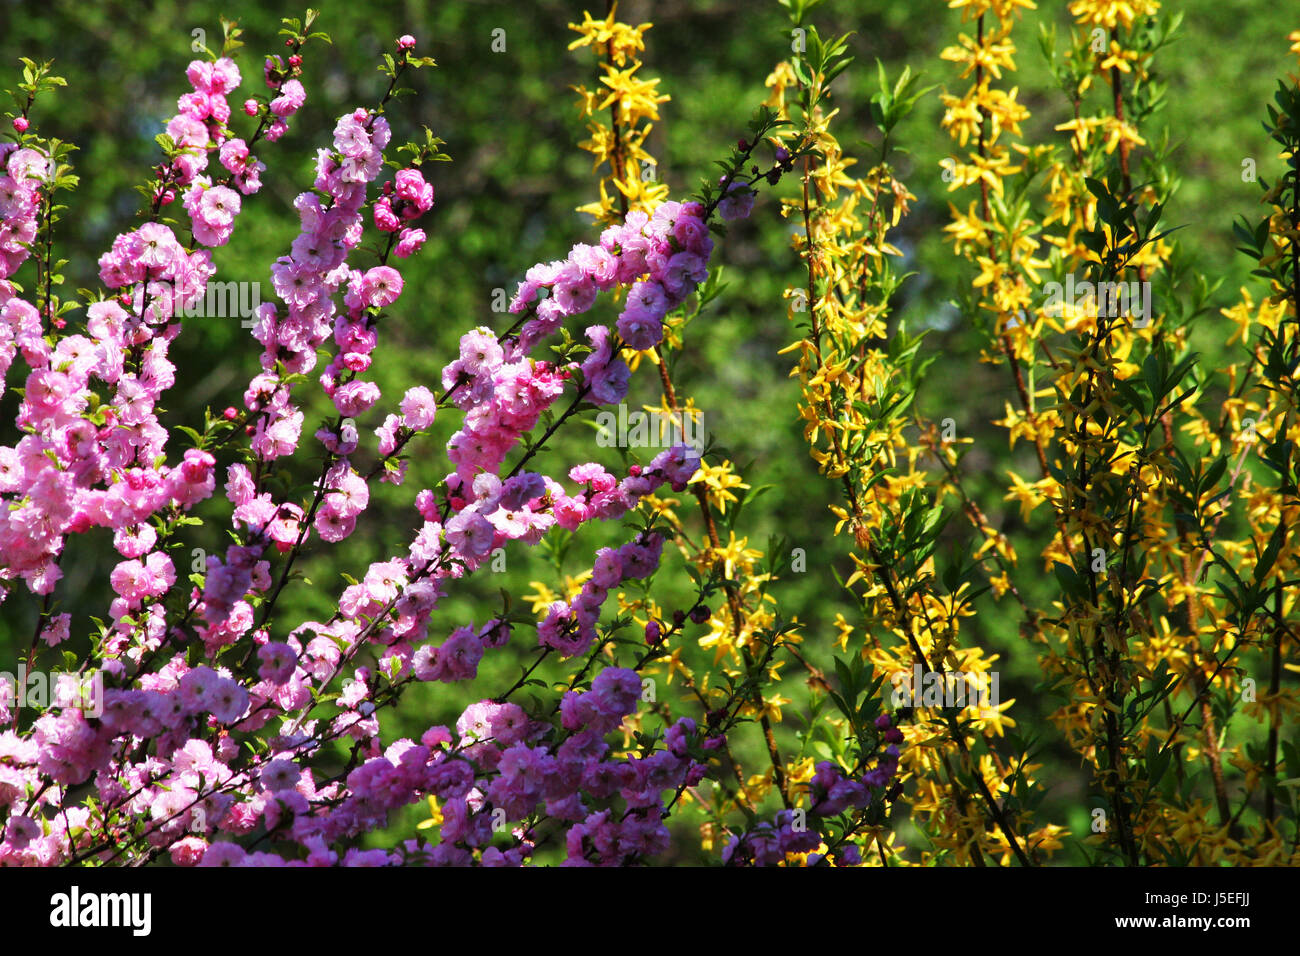 garden bloom blossom flourish flourishing coloured colourful gorgeous Stock Photo